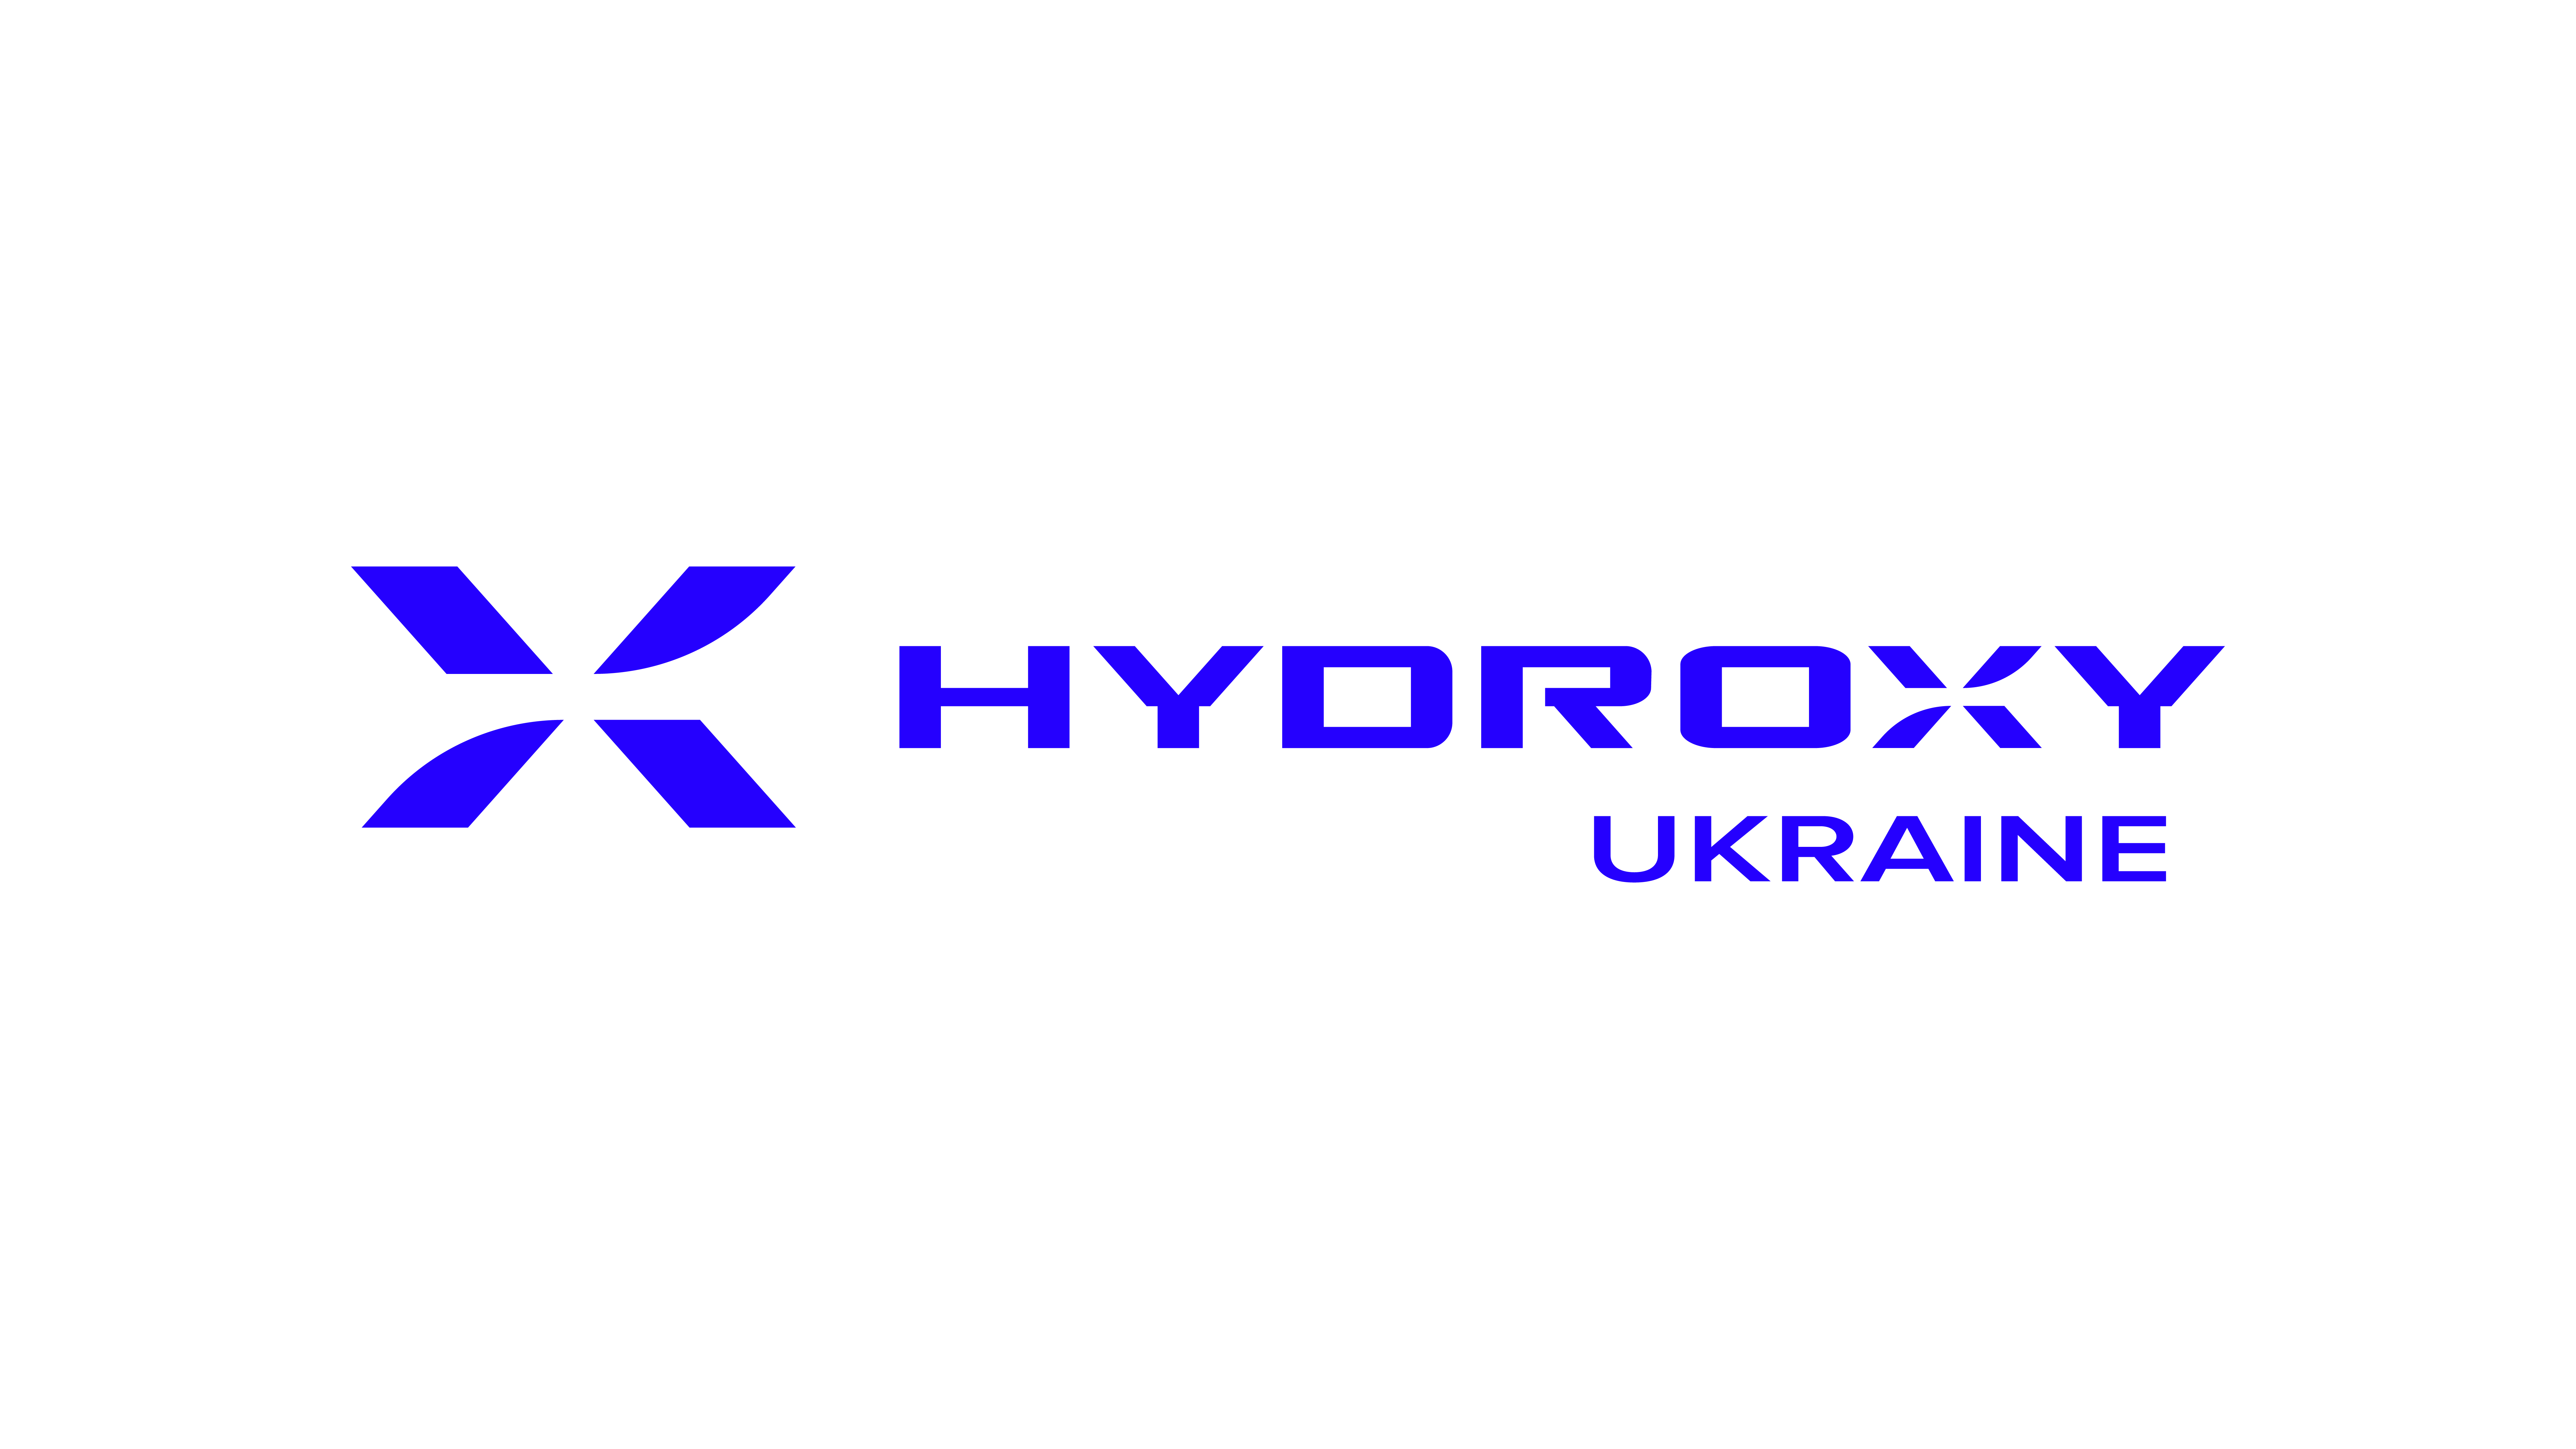 Hydroxy Ukraine